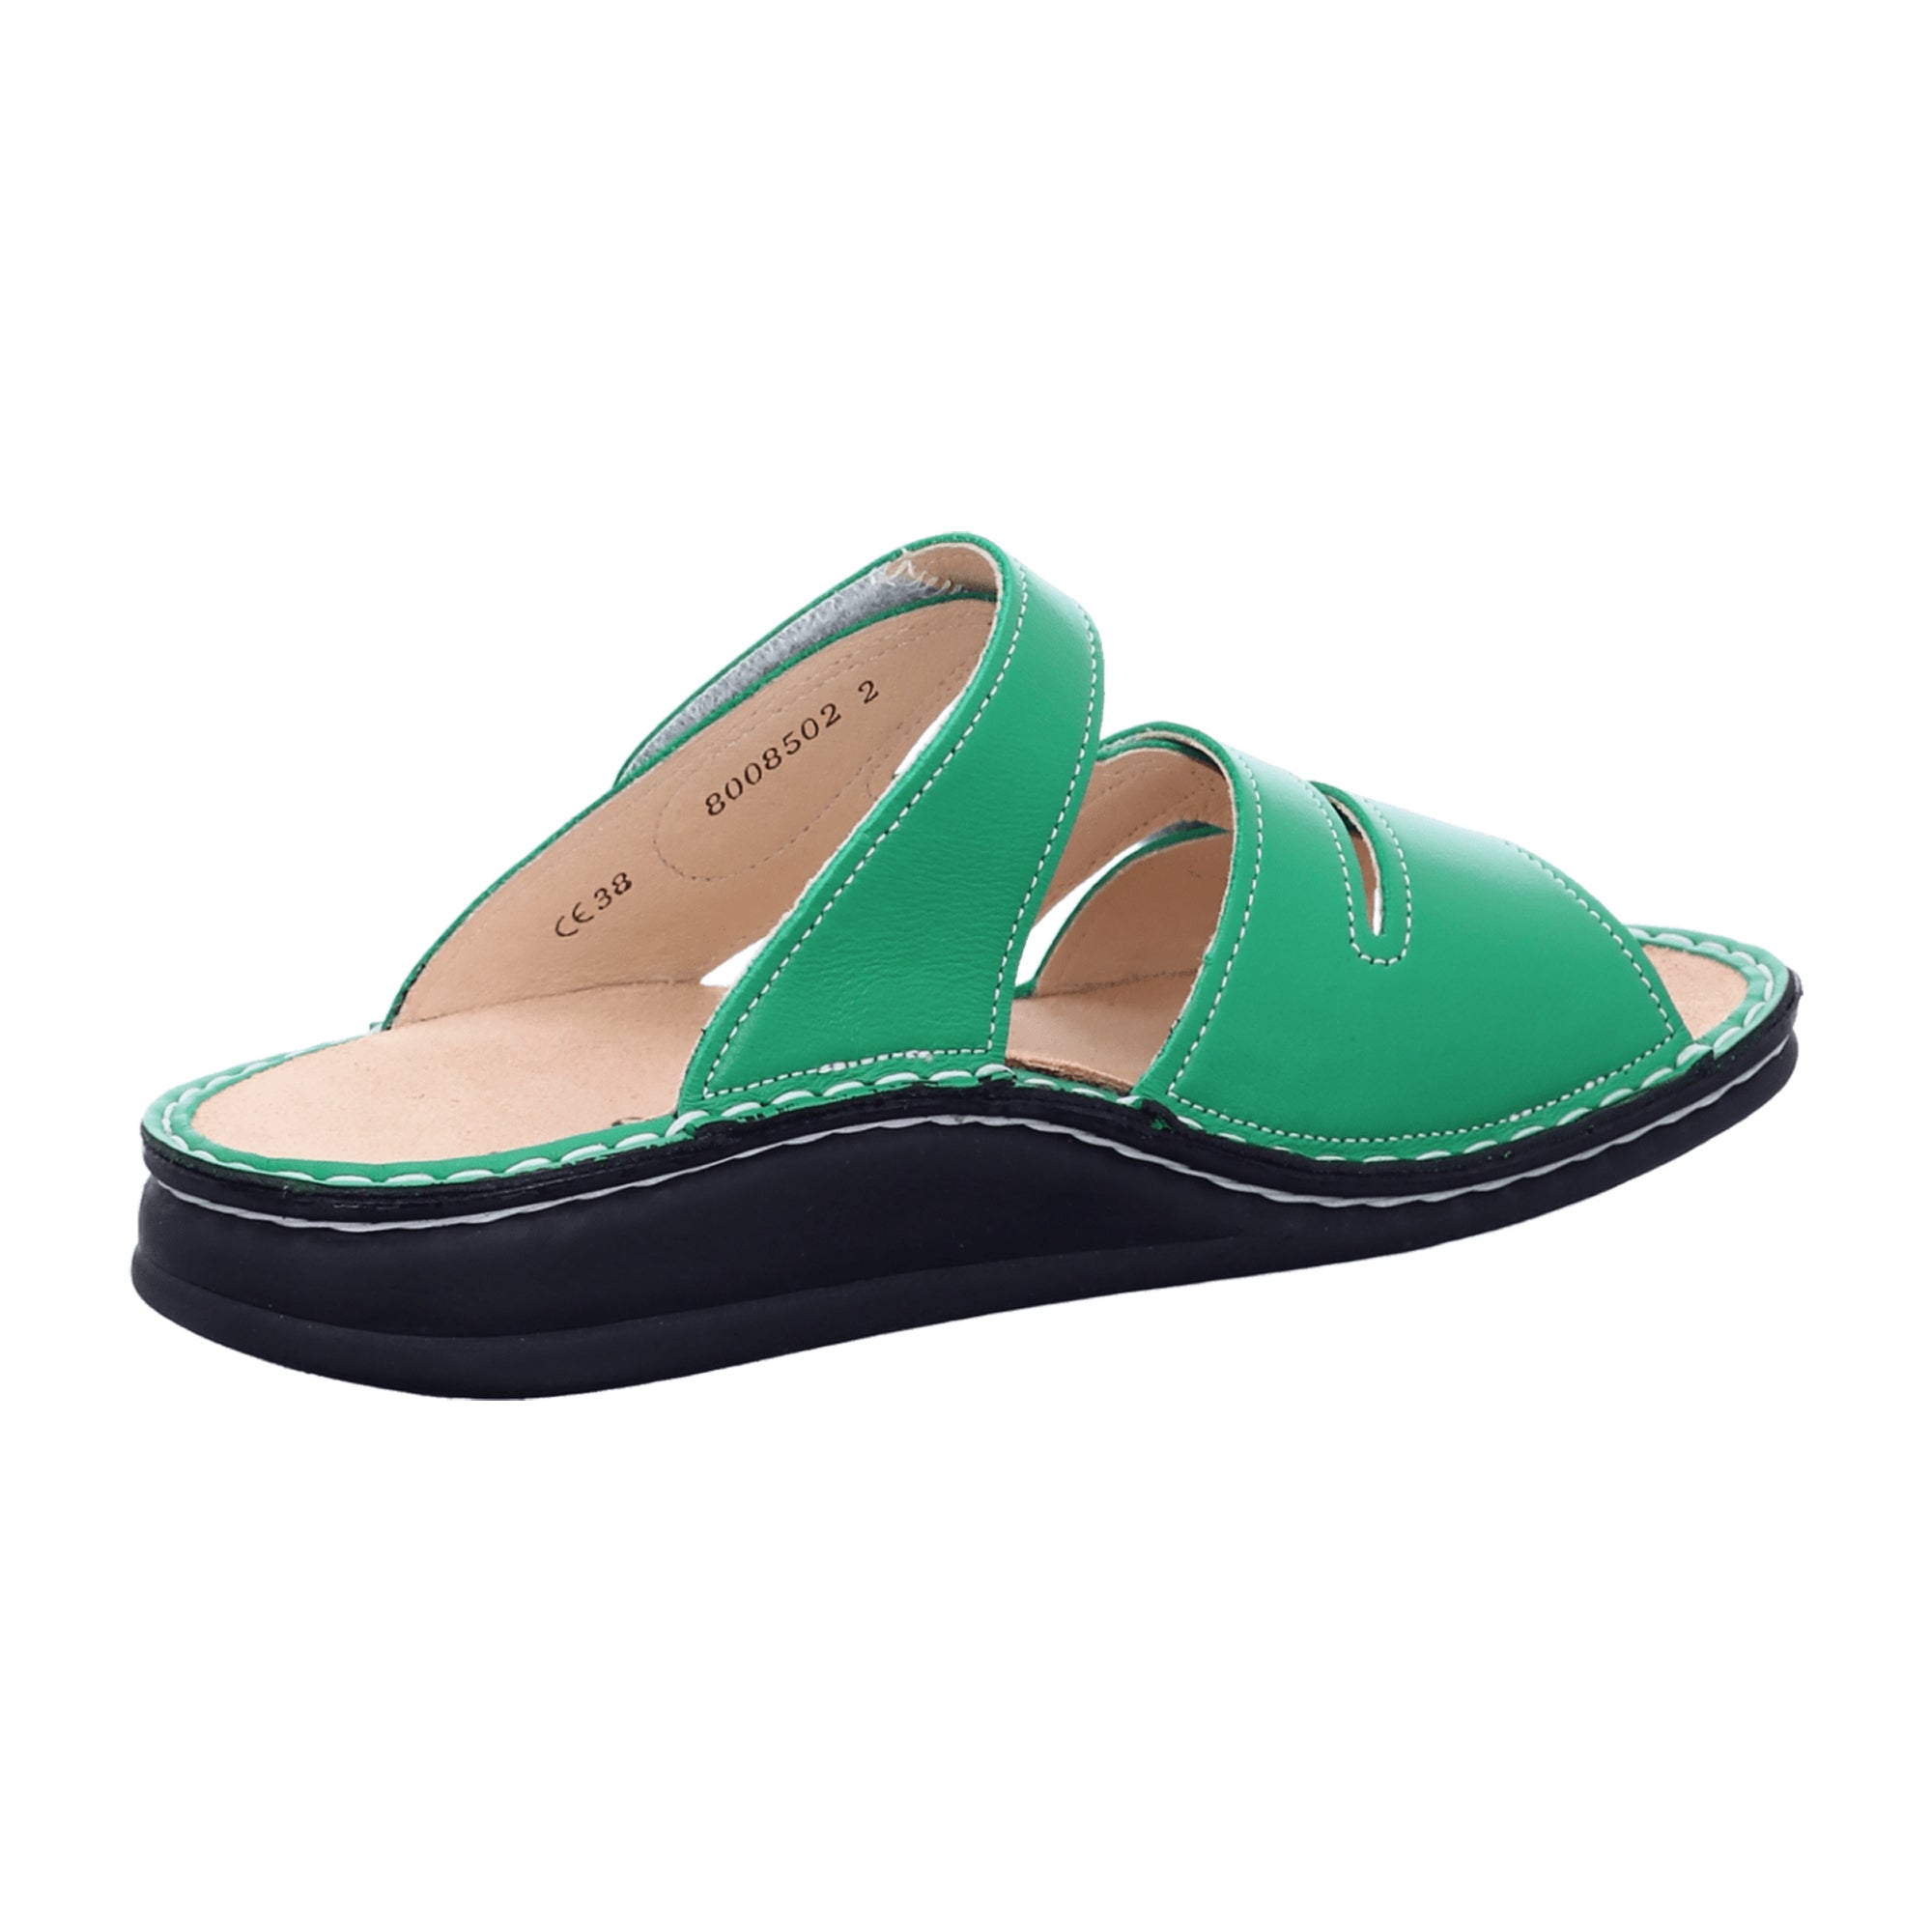 Finn Comfort Agueda Women's Comfortable Sandals in Green - Stylish & Durable